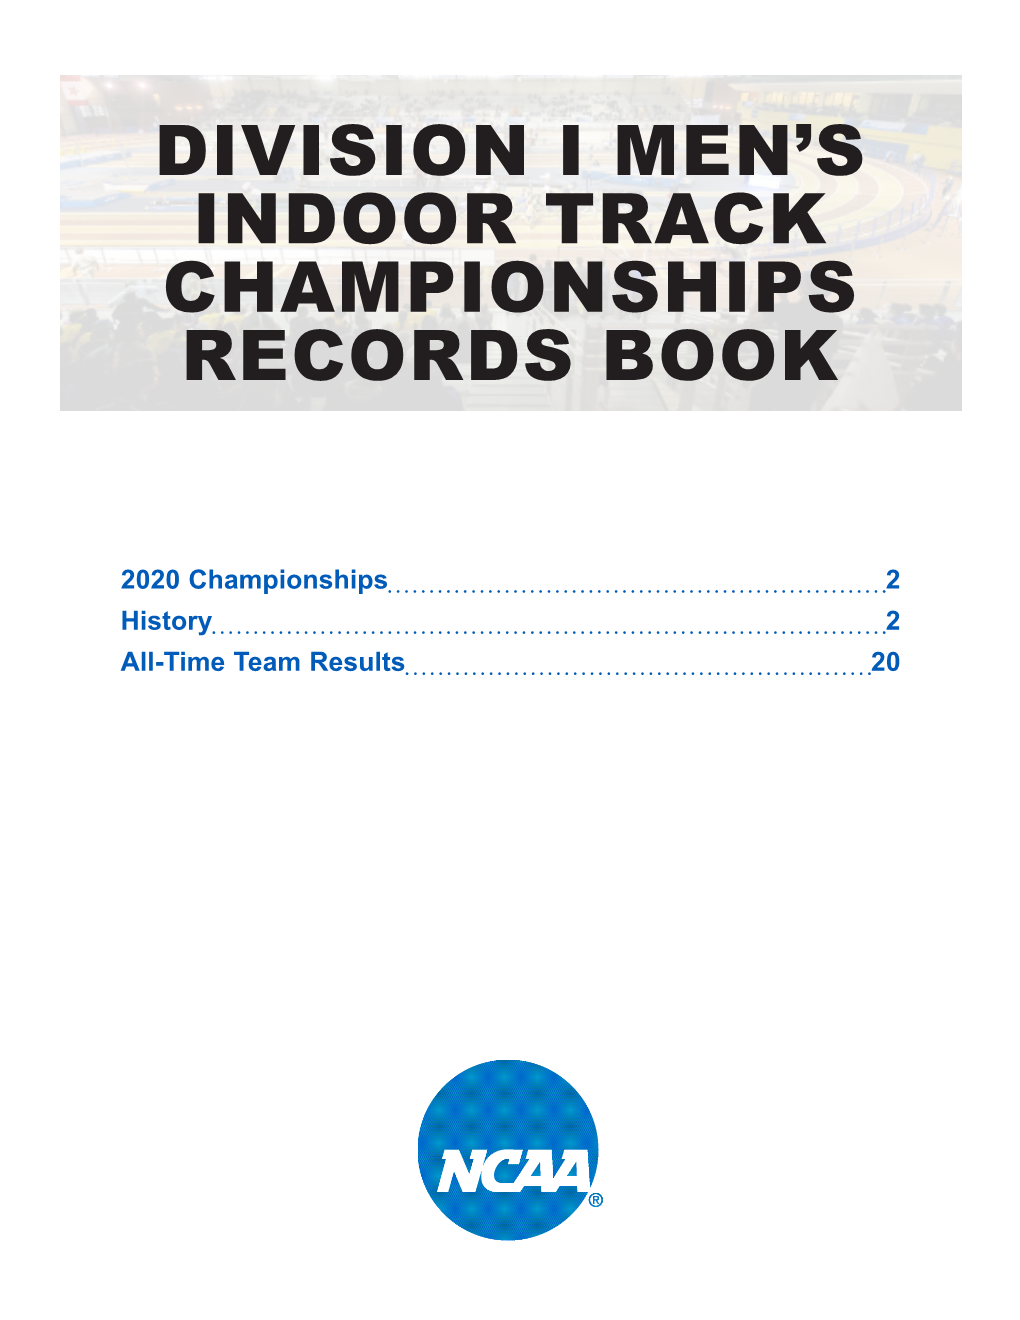 Division I Men's Indoor Track Championships Records Book